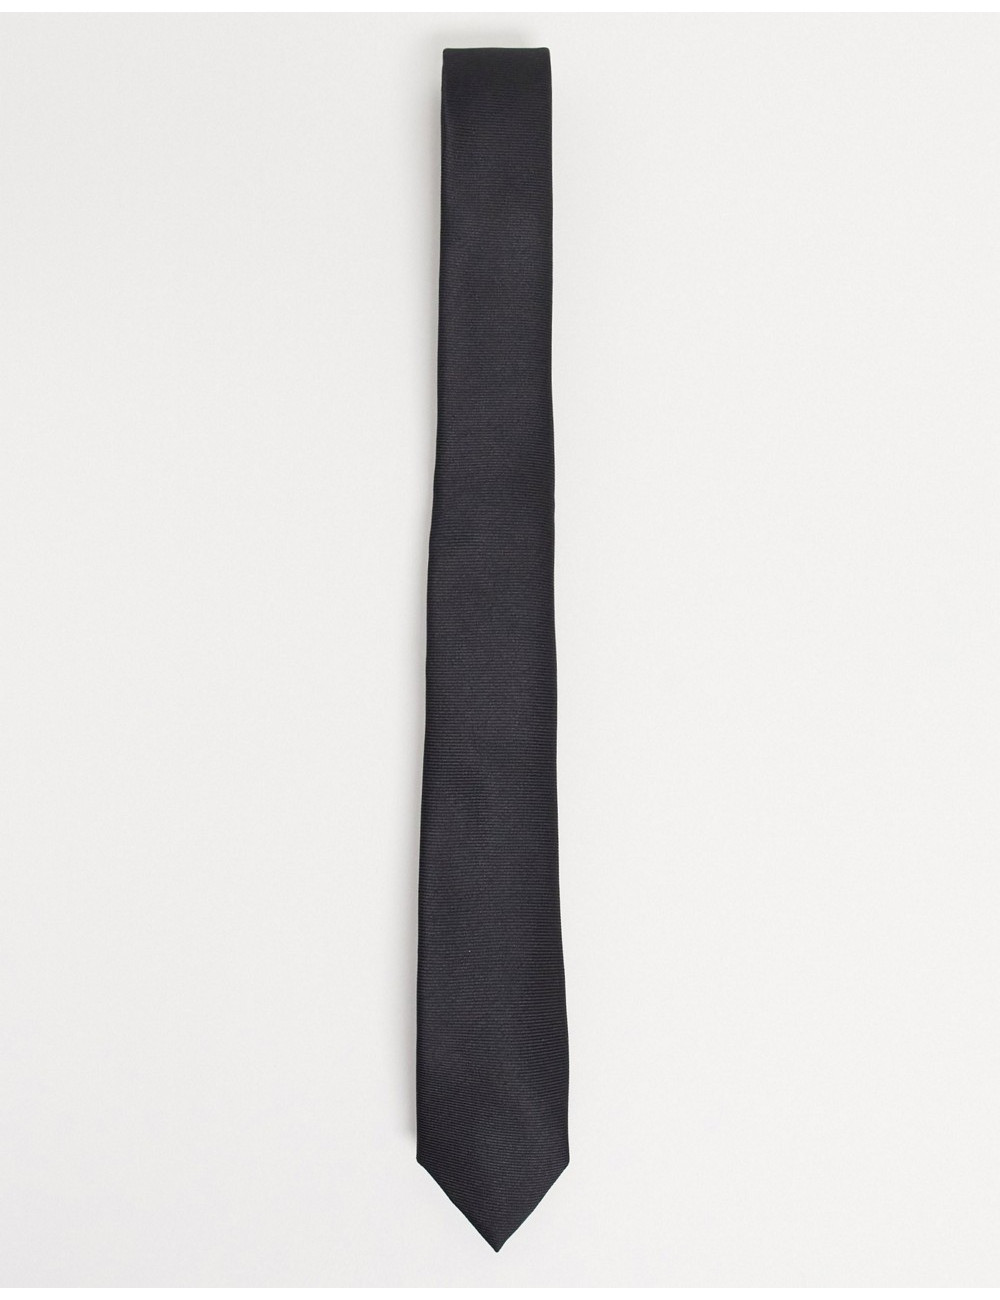 ASOS DESIGN slim tie in black